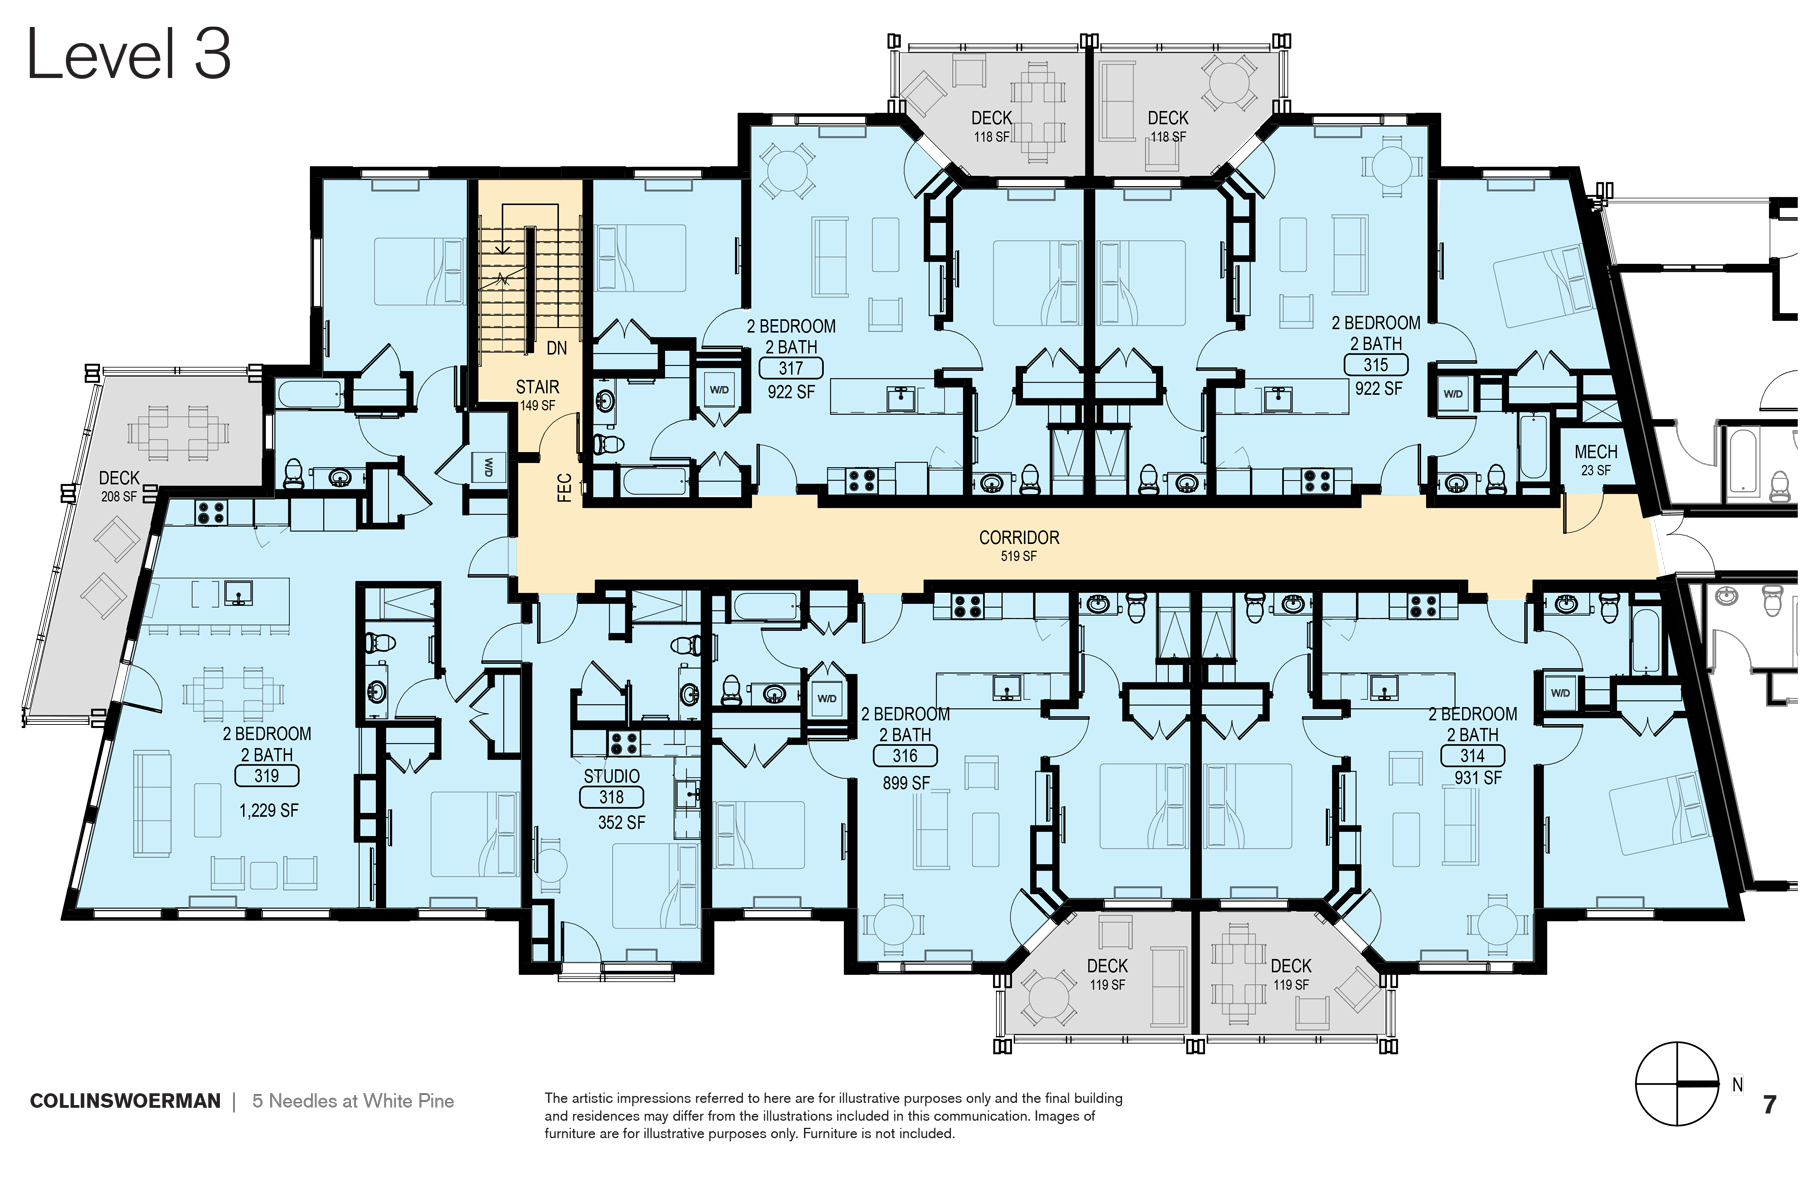 3rd floor layout plan